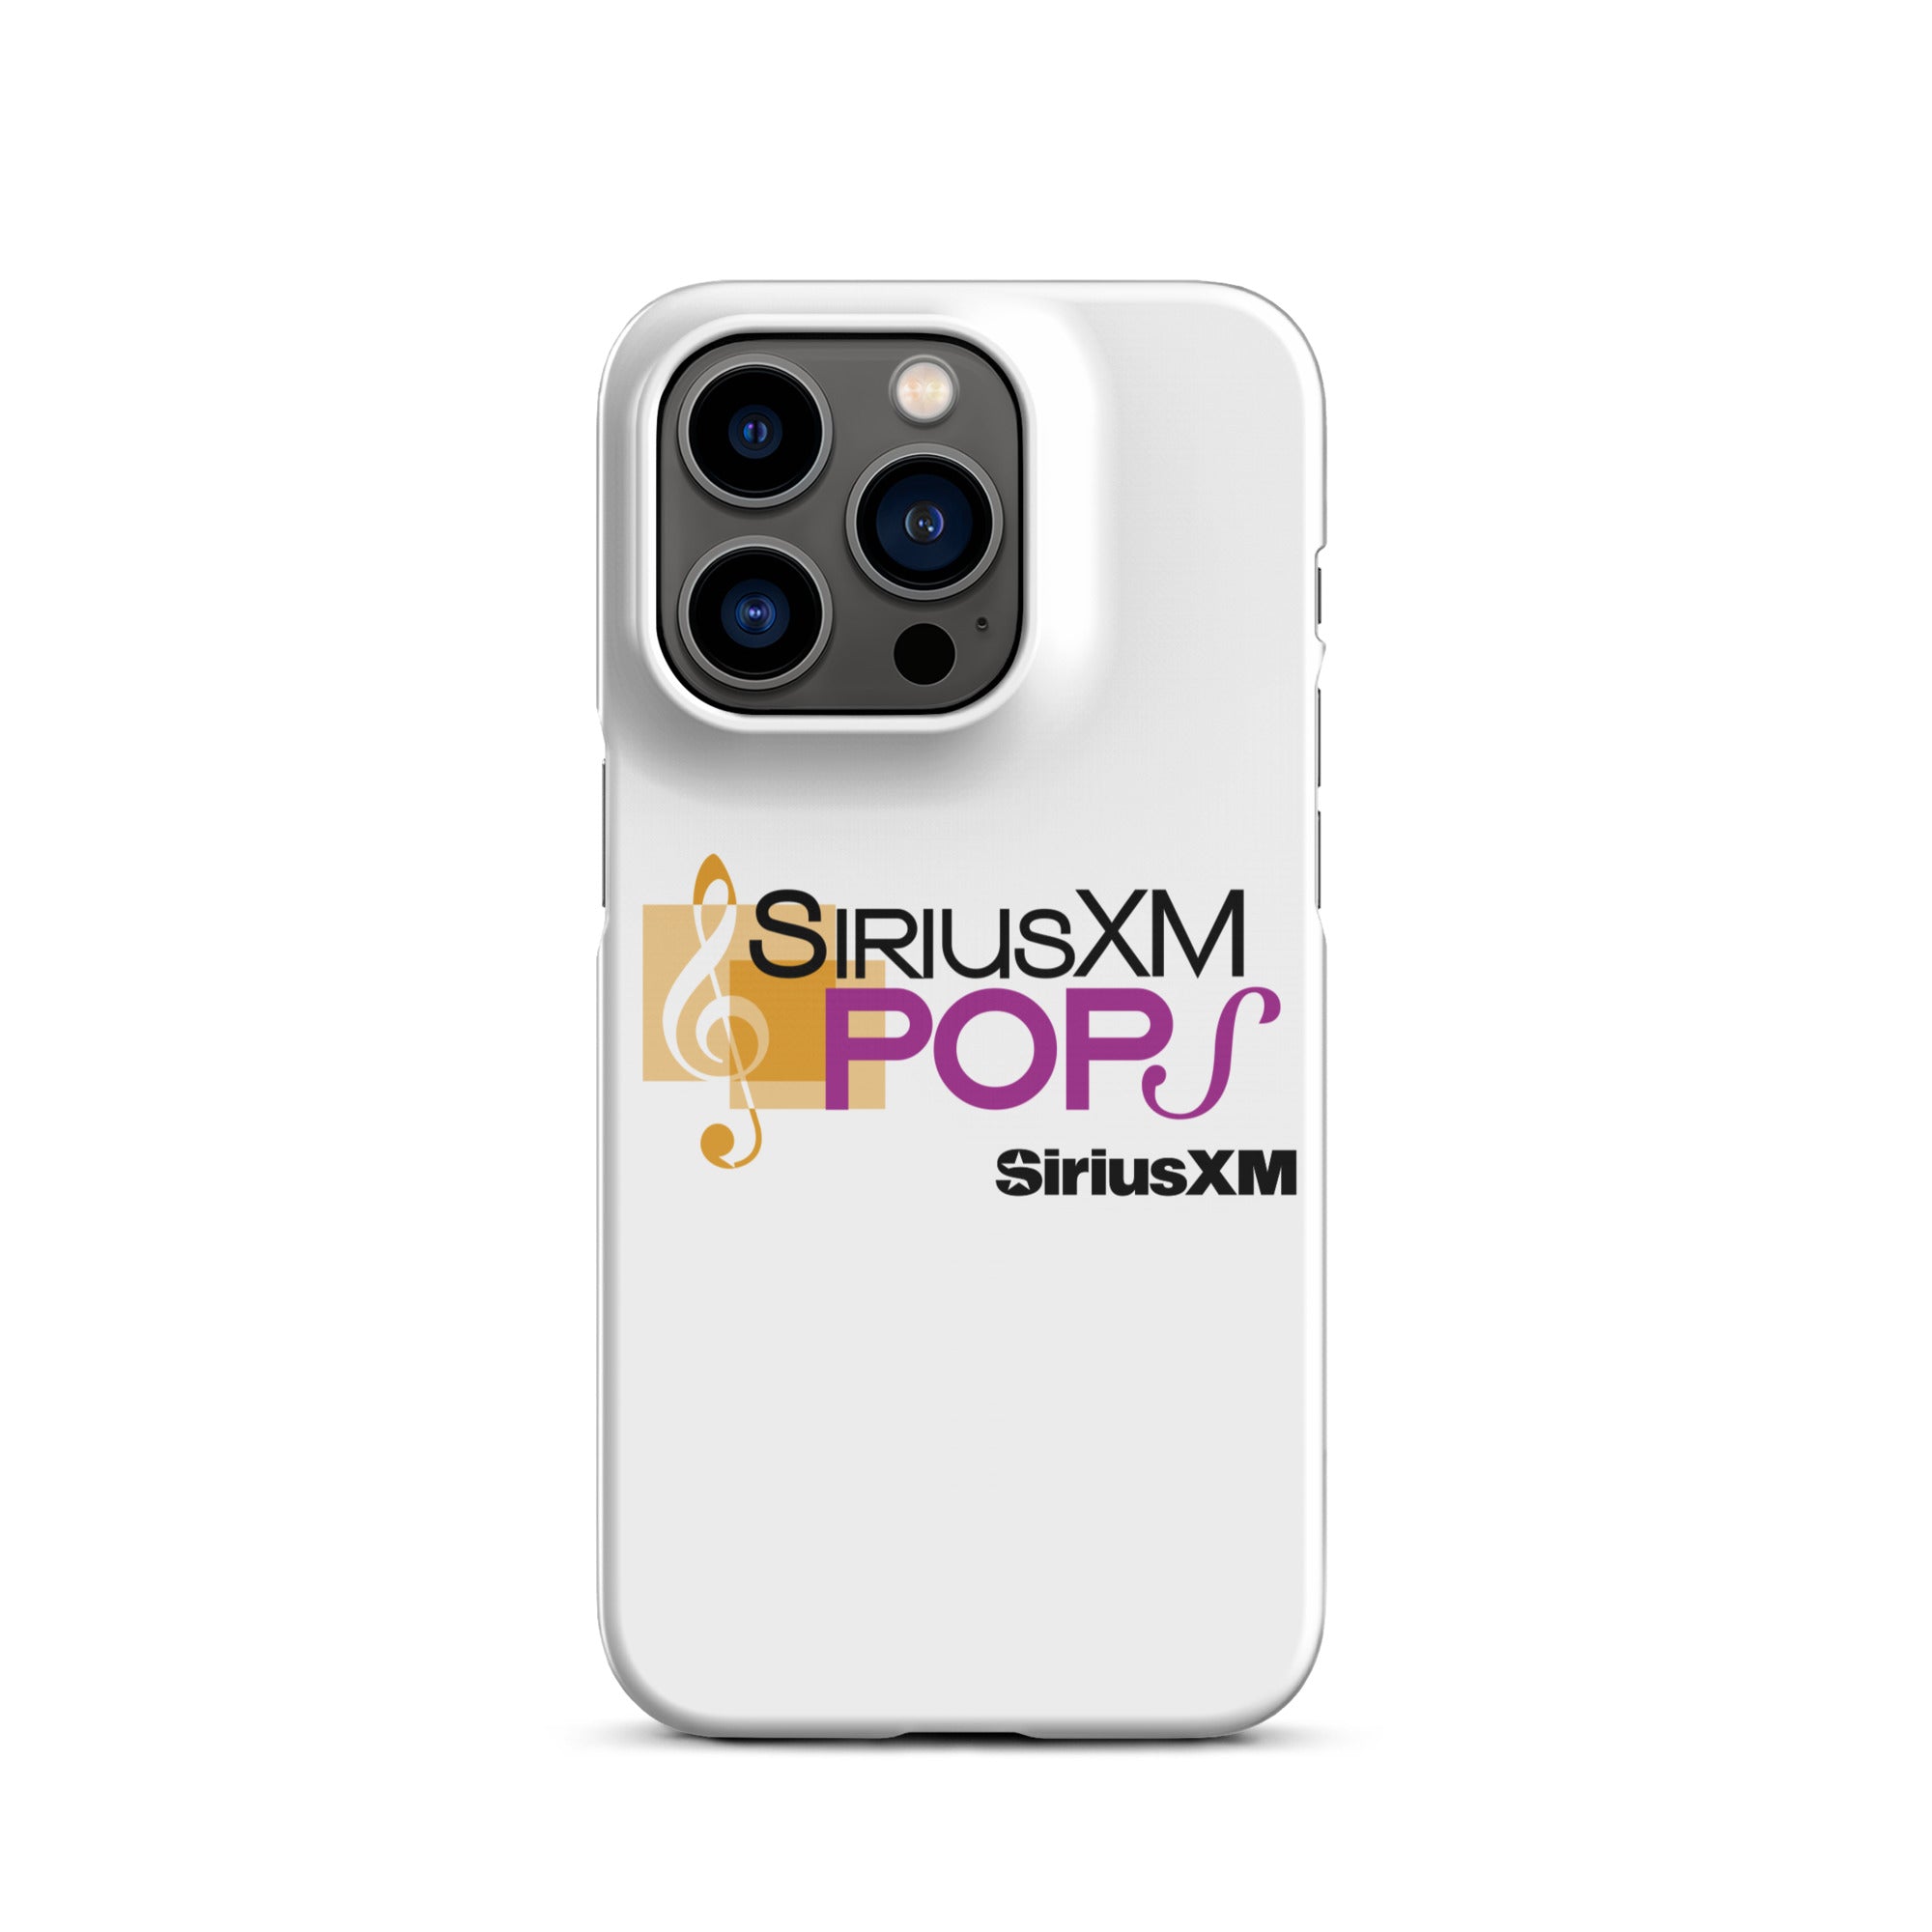 SiriusXM Pops: iPhone® Snap Case